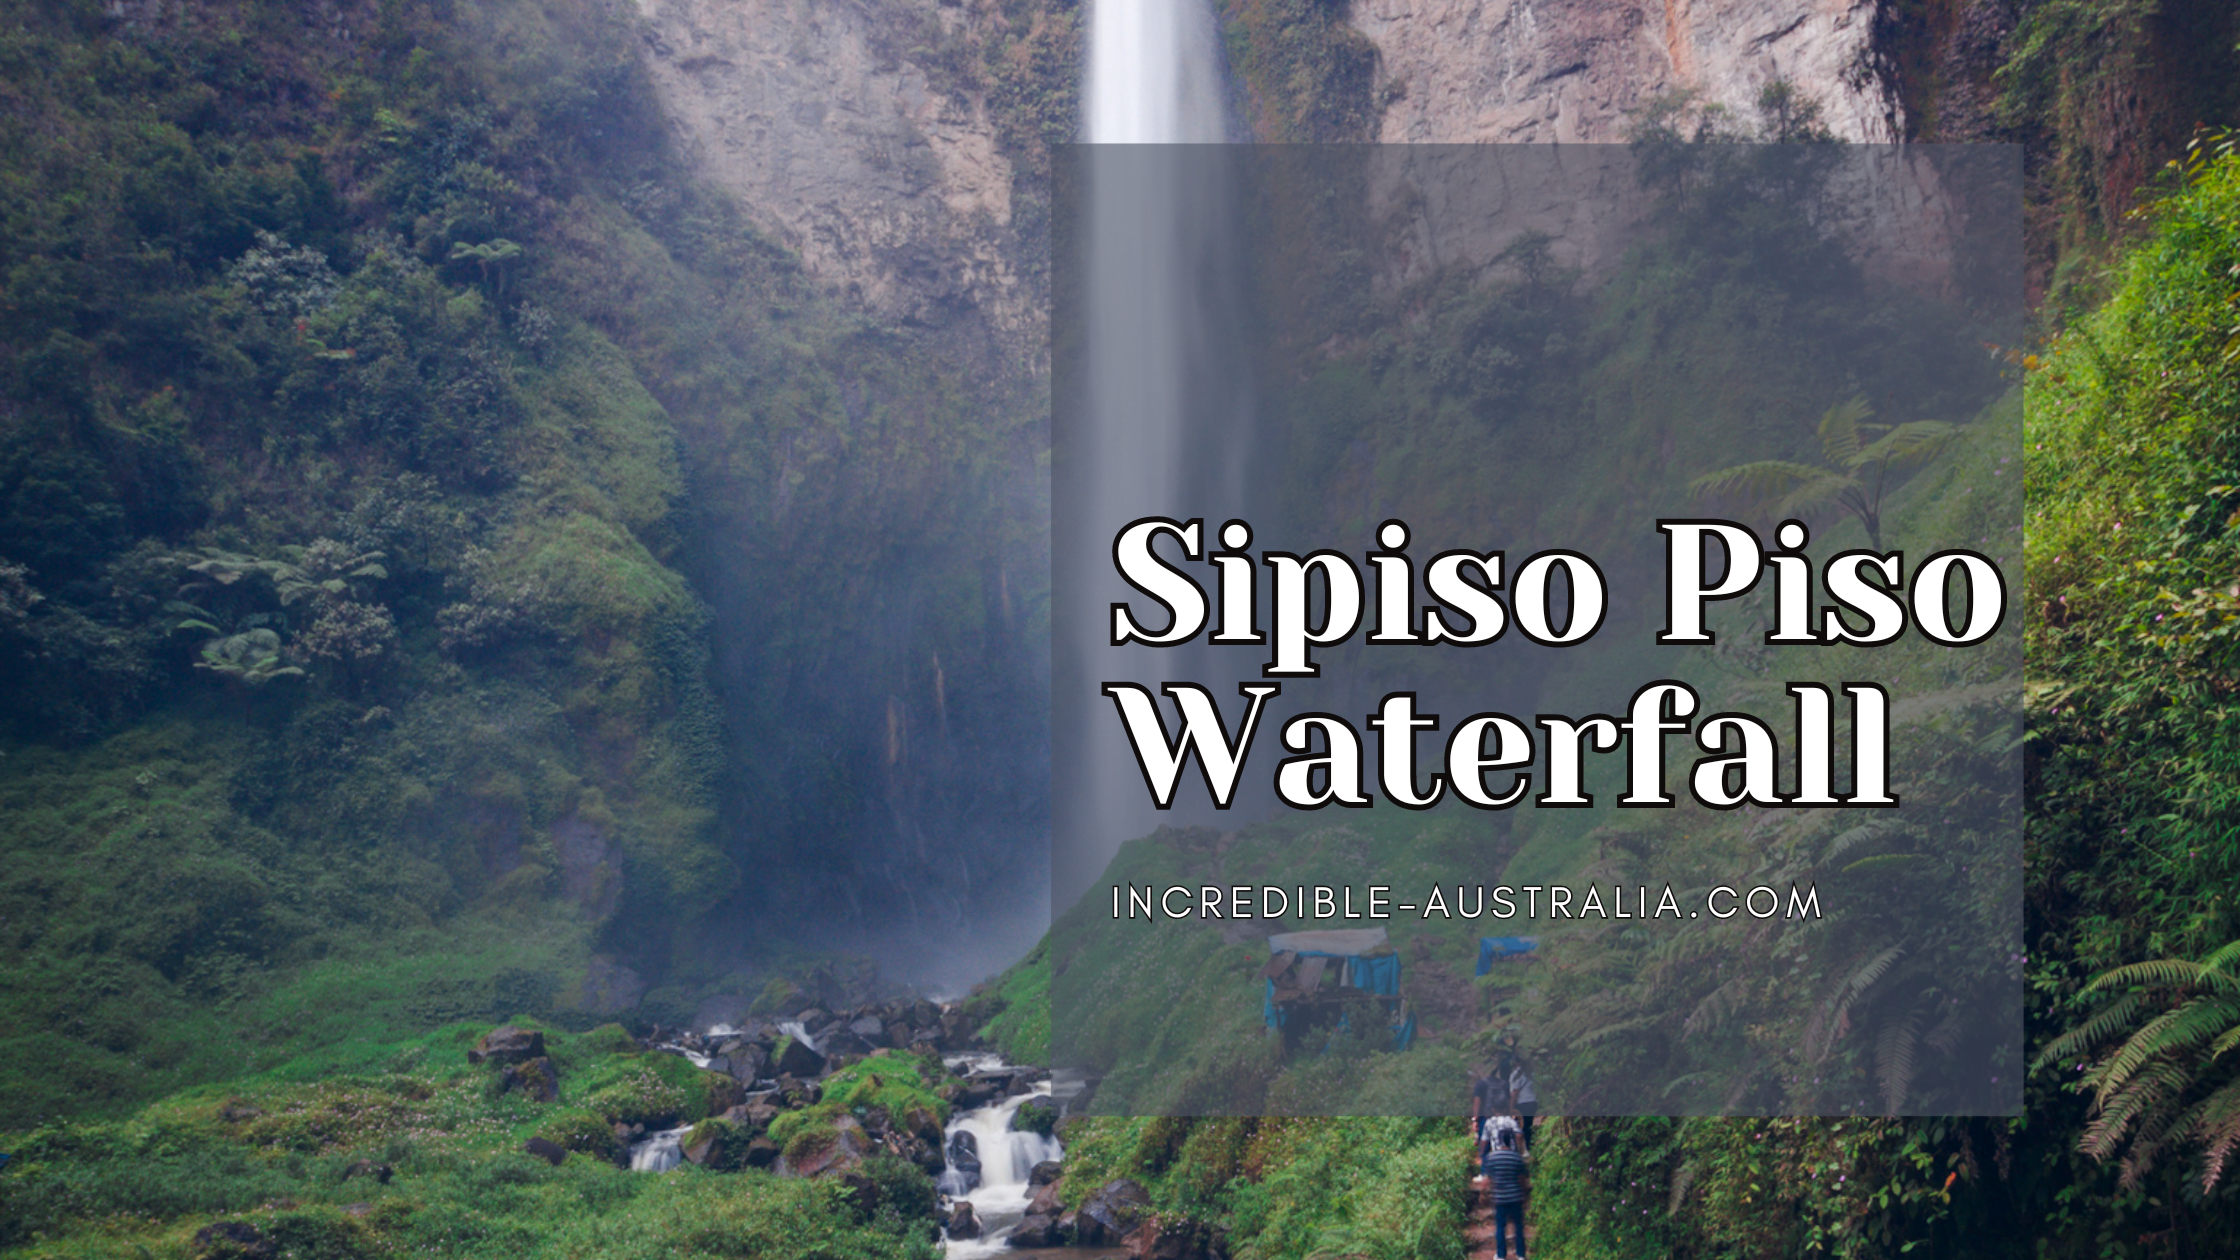 Sipiso Piso Waterfall